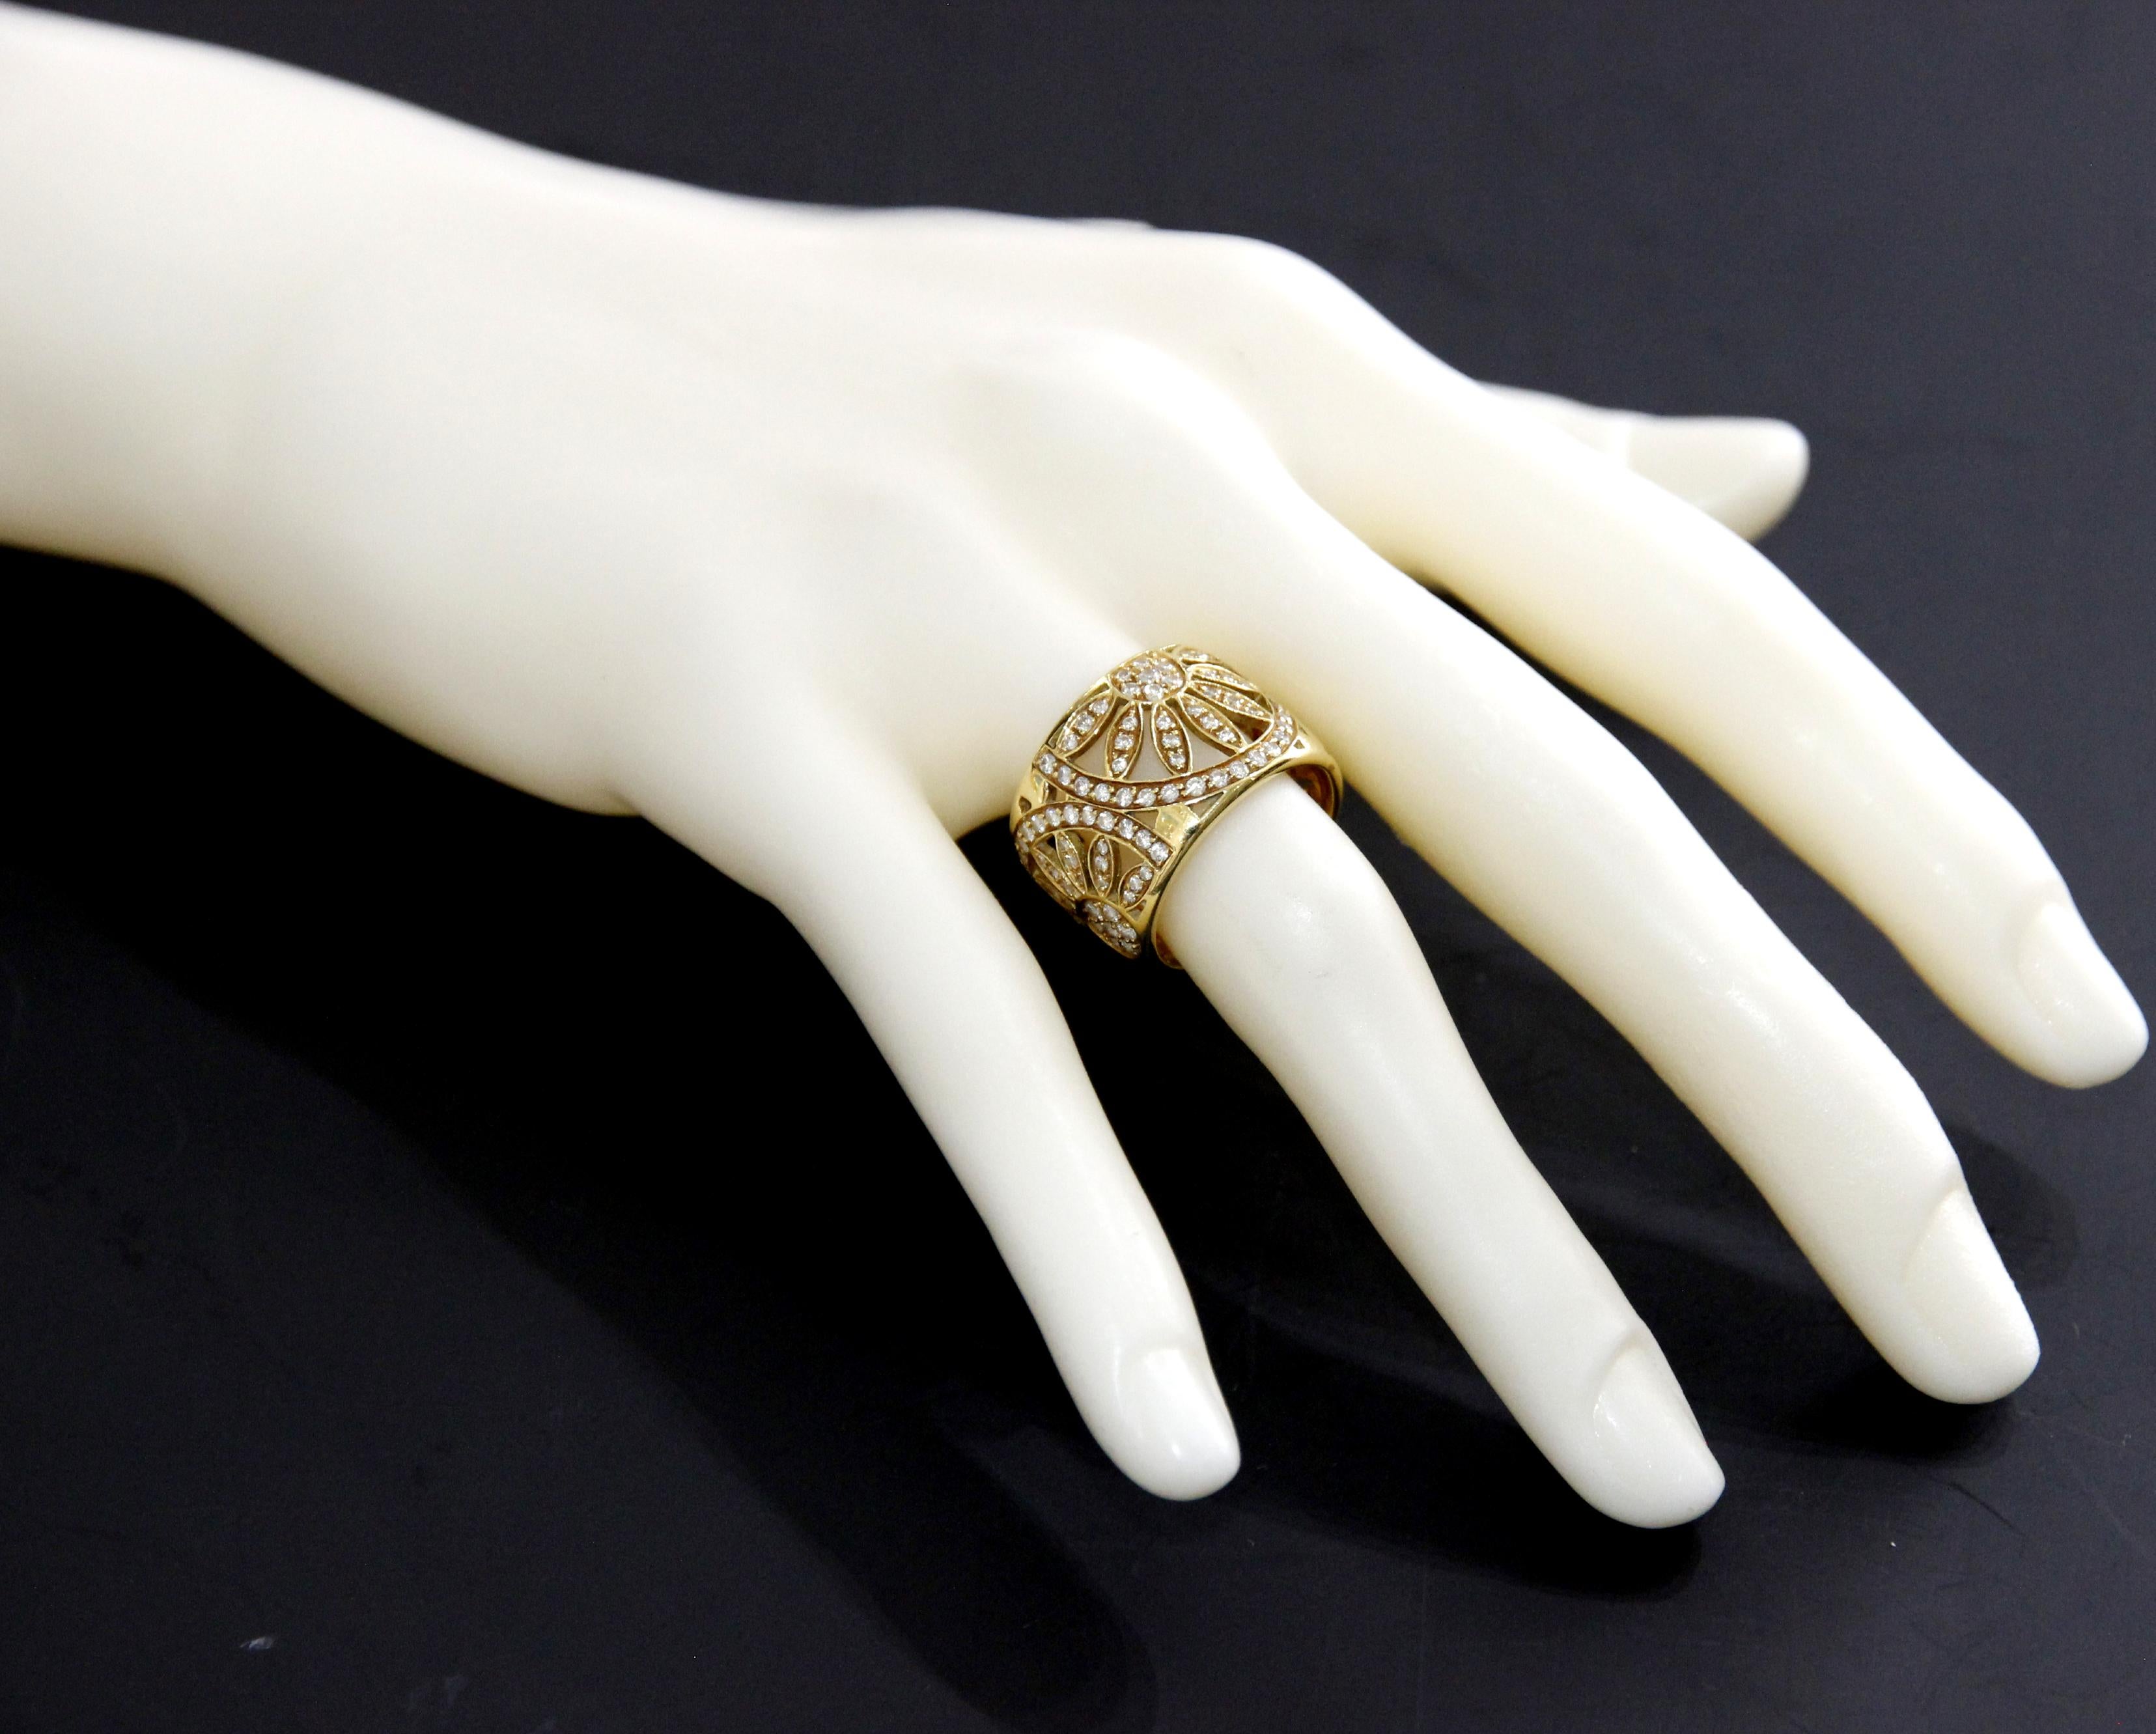 Nouvelle Bague 18K Yellow Gold Diamond  Ring
Diamonds 0.99ctw
Size 7.5
Retail $9,700.00